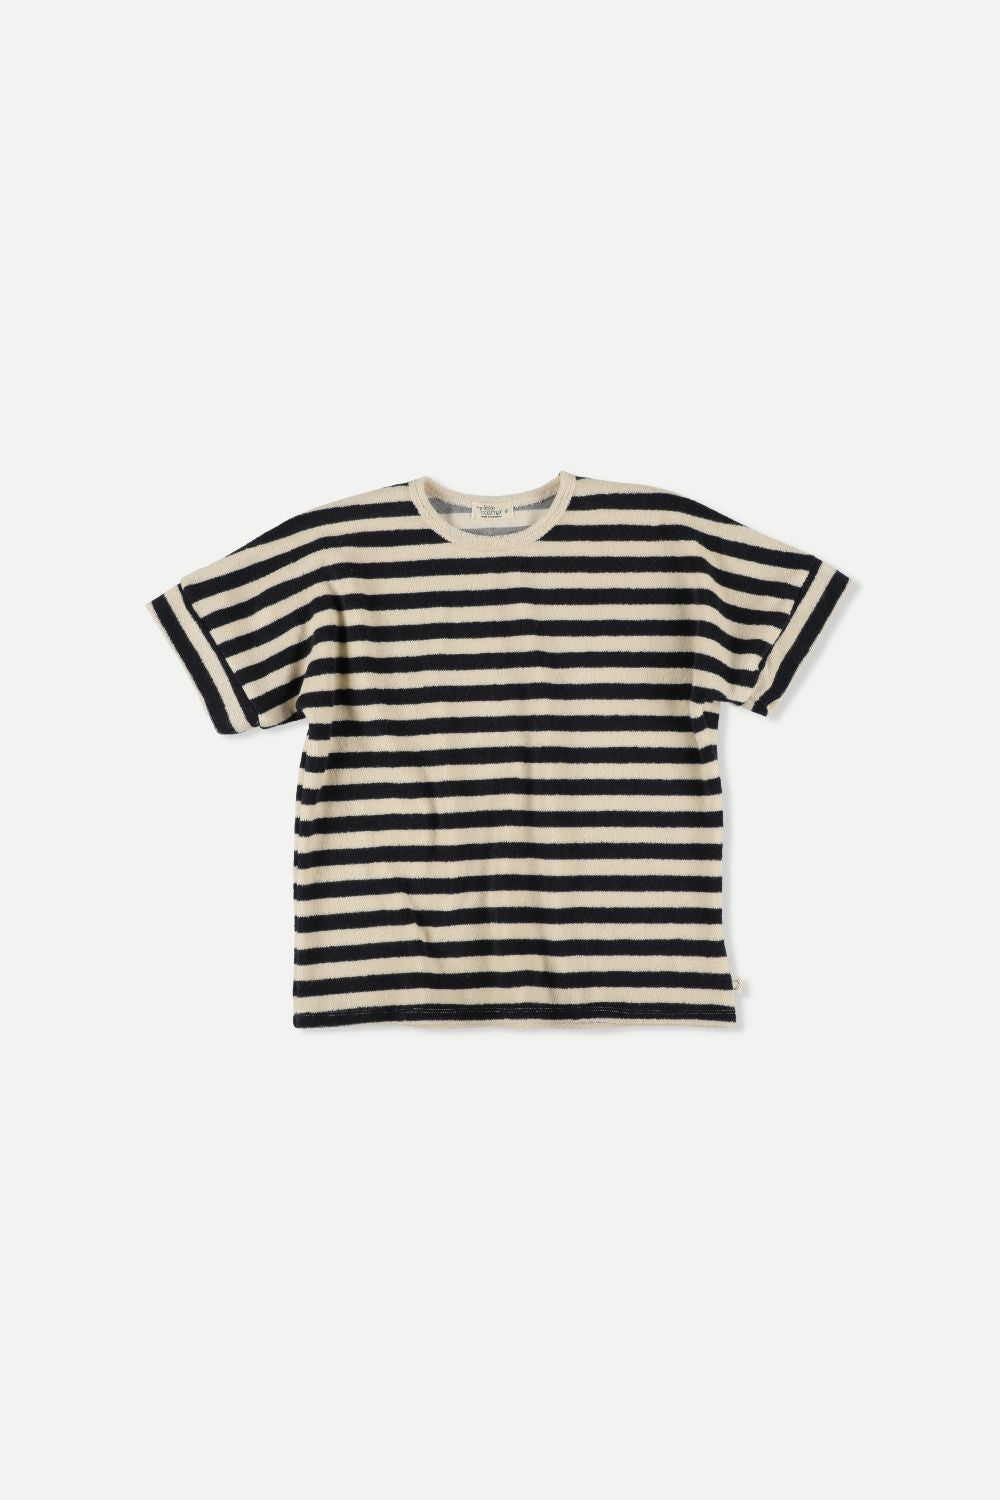 Little Cozmo striped ss t-shirt (SZ 2-5)